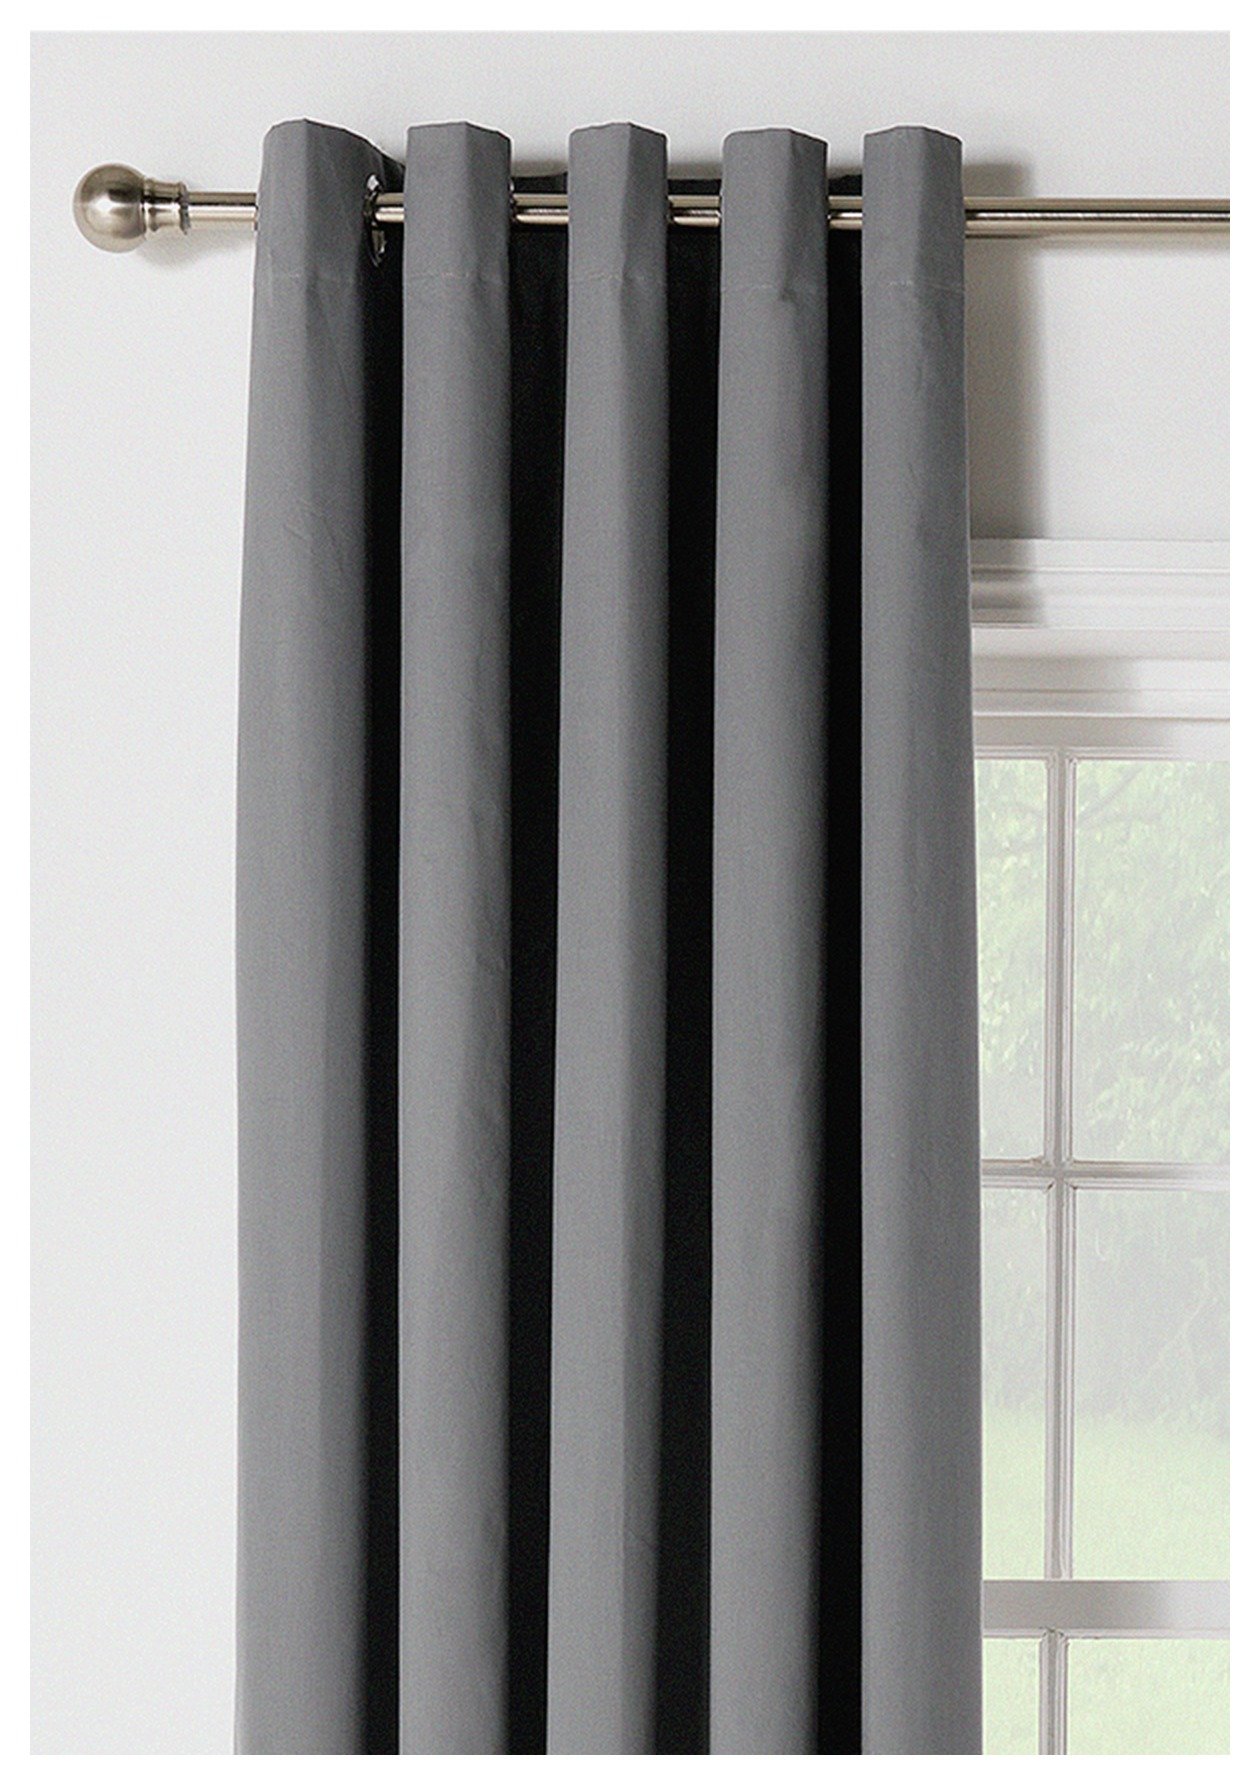 ColourMatch Blackout Thermal Curtain - 229x229cm -Flint Grey